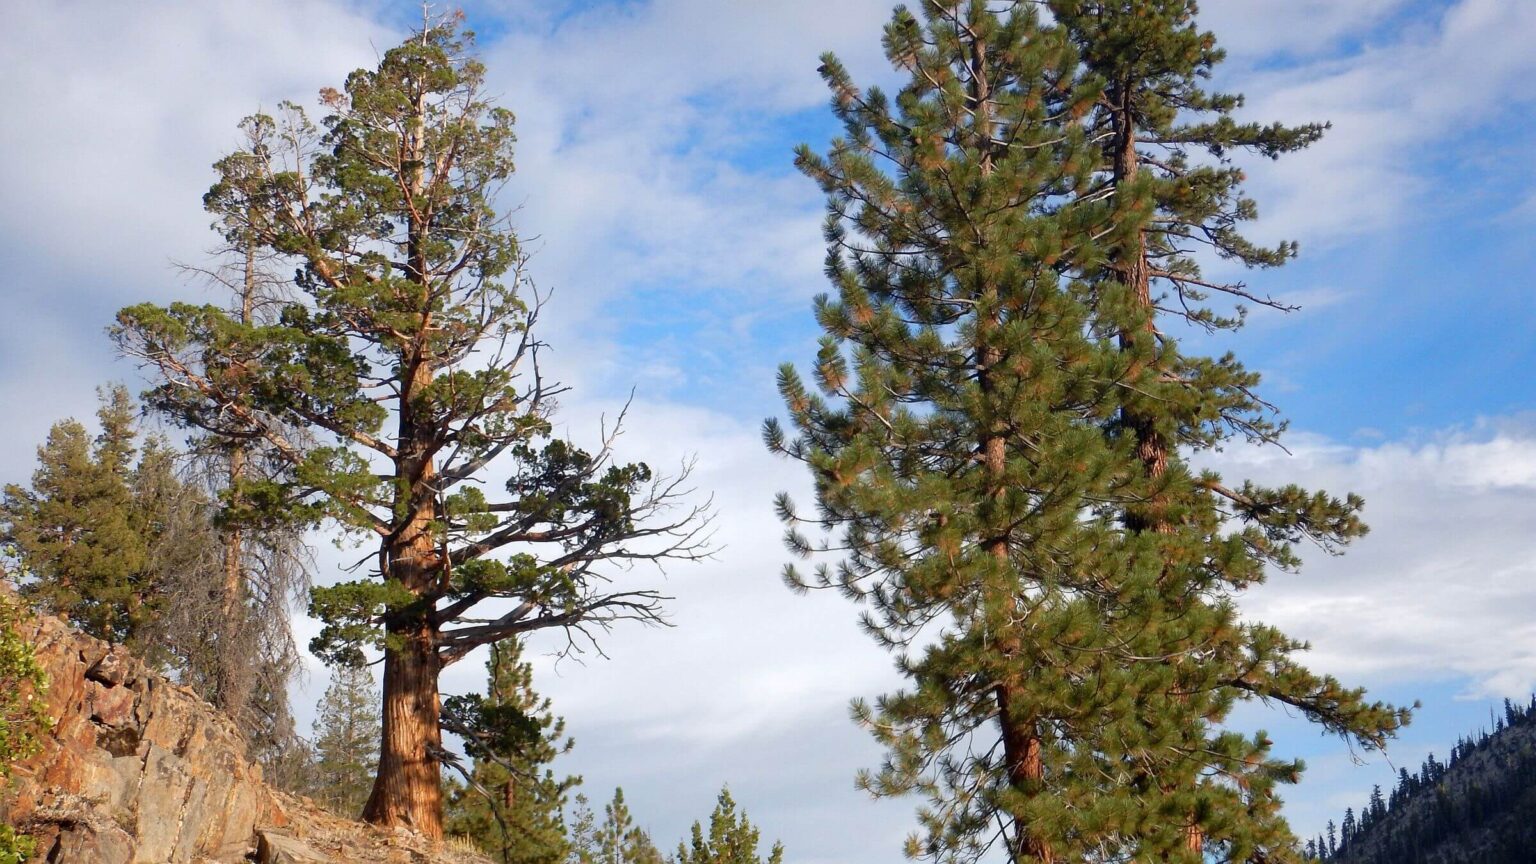 Ansel Adams Wilderness, backpacking, Sierra juniper & pines, September